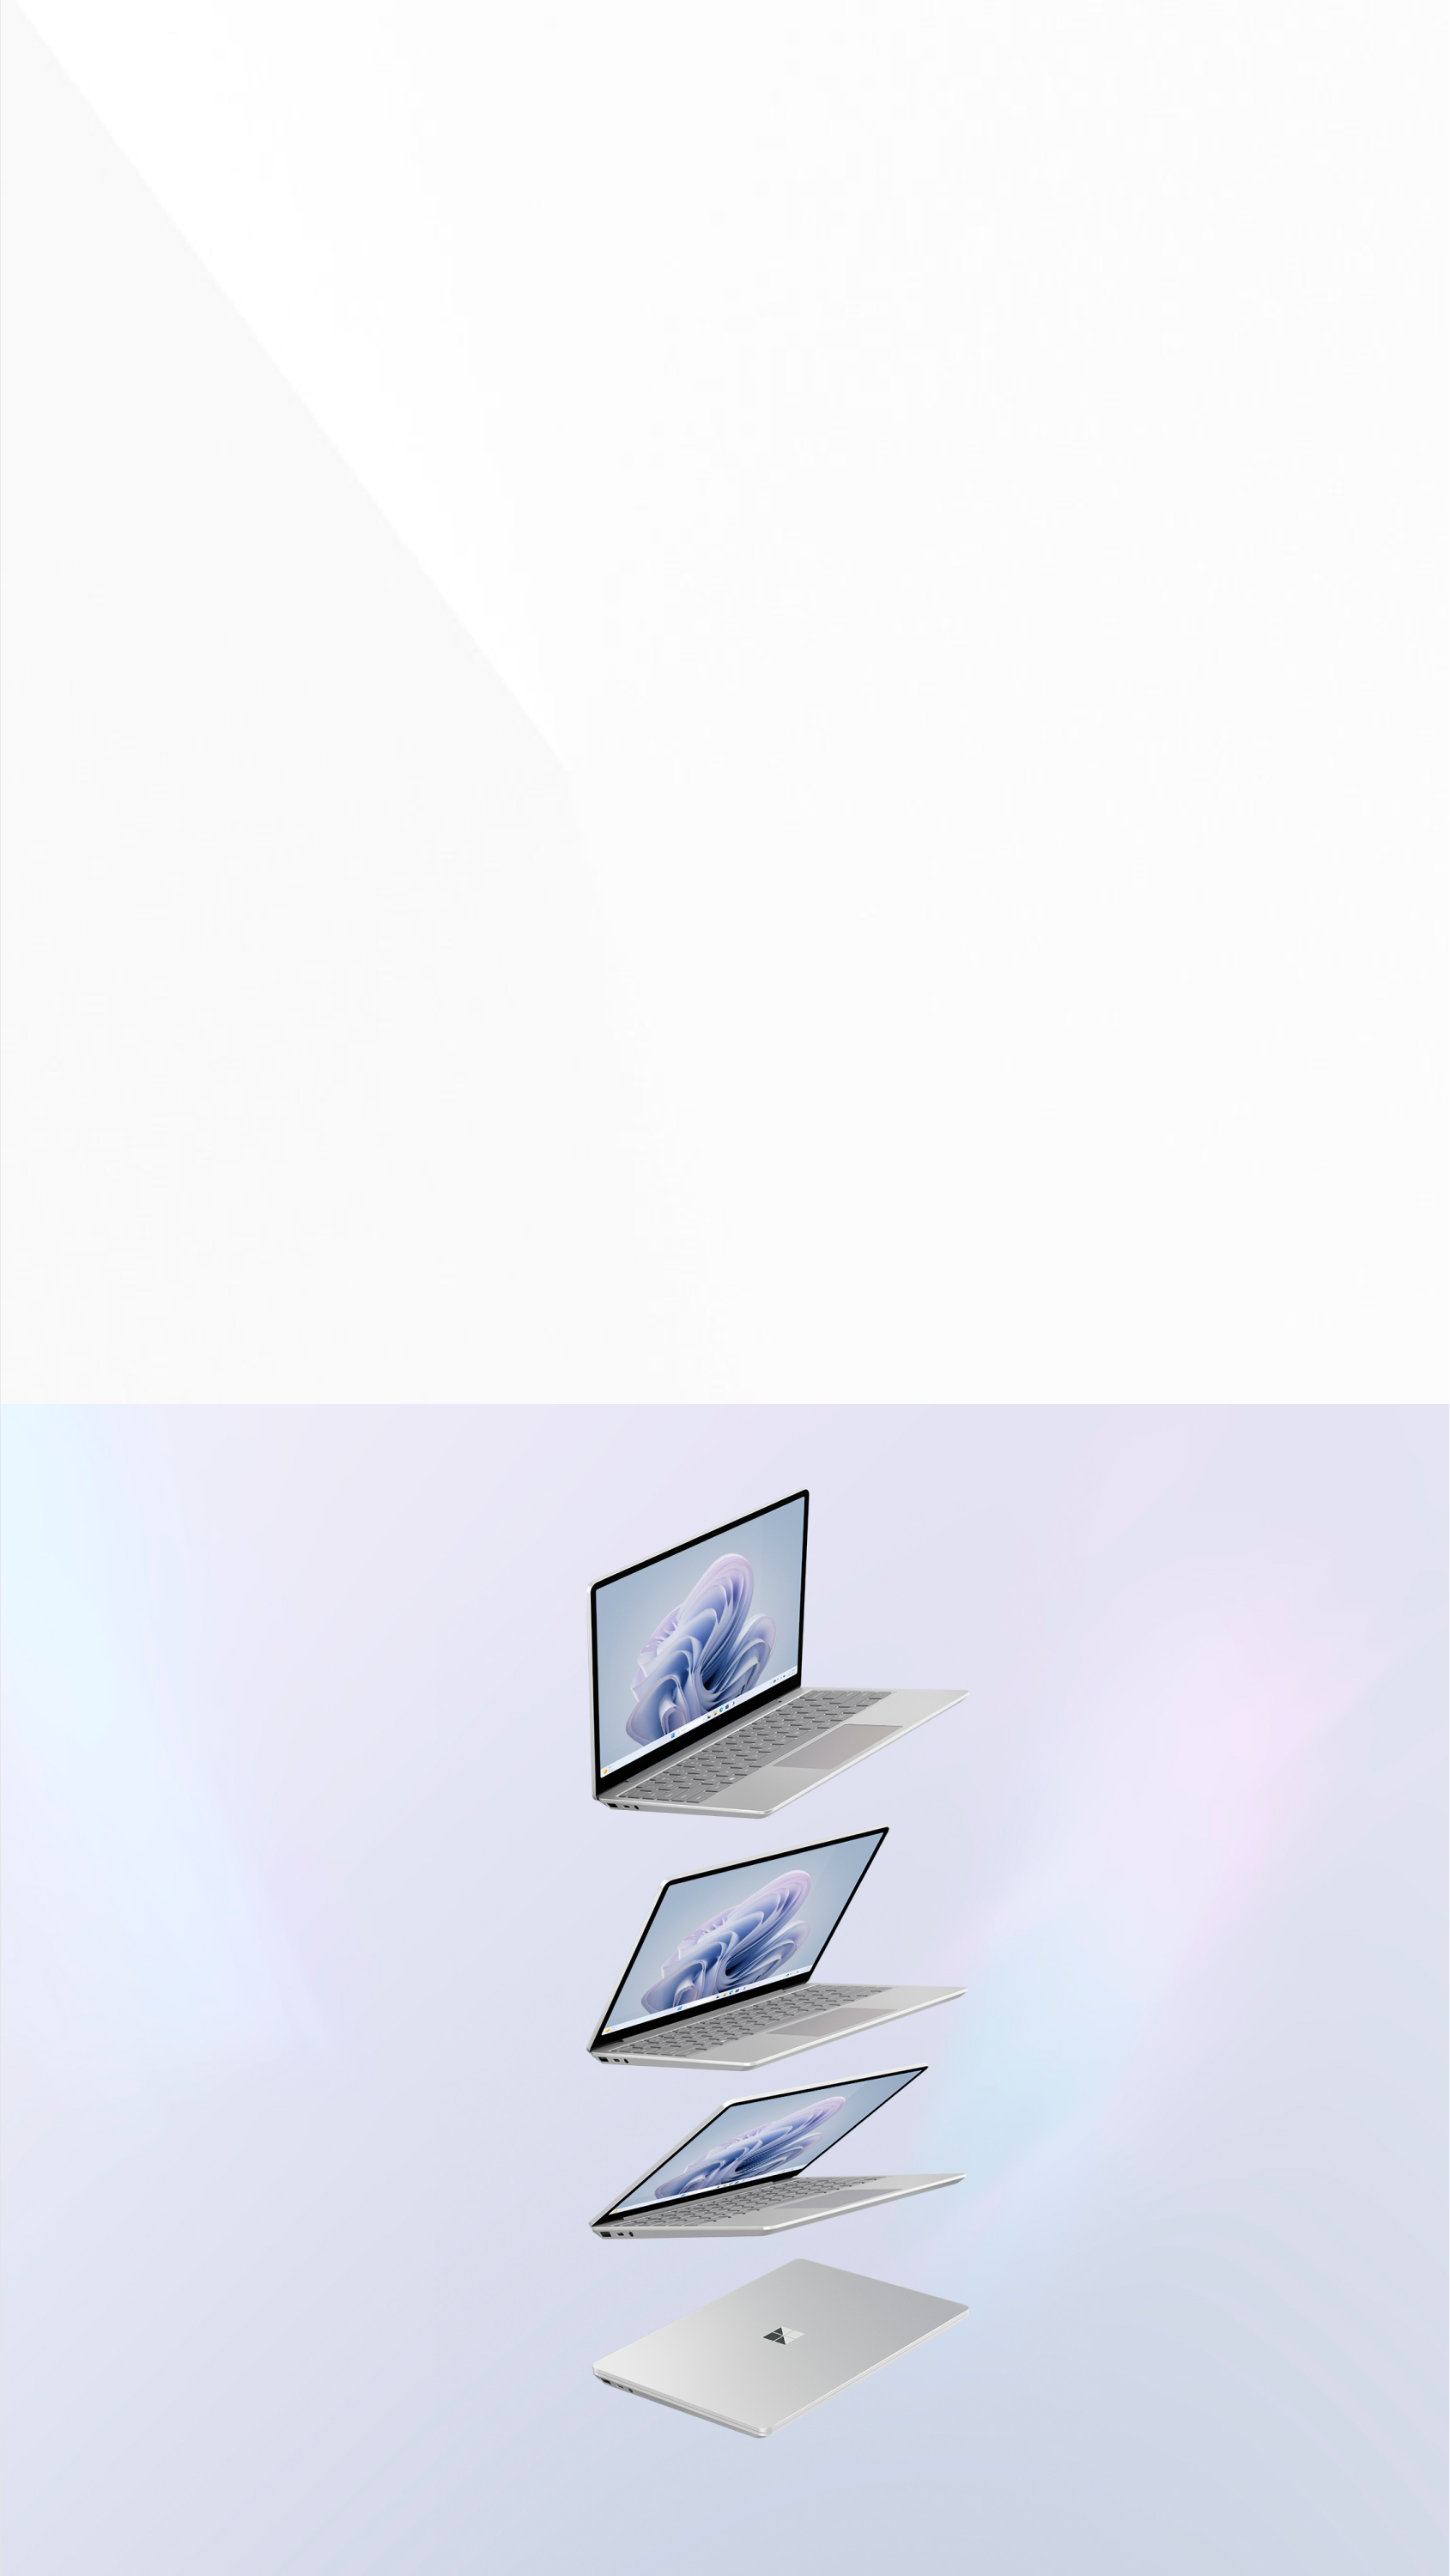 Surface Laptop Go 3(플래티넘) 제품 비디오의 스틸 이미지